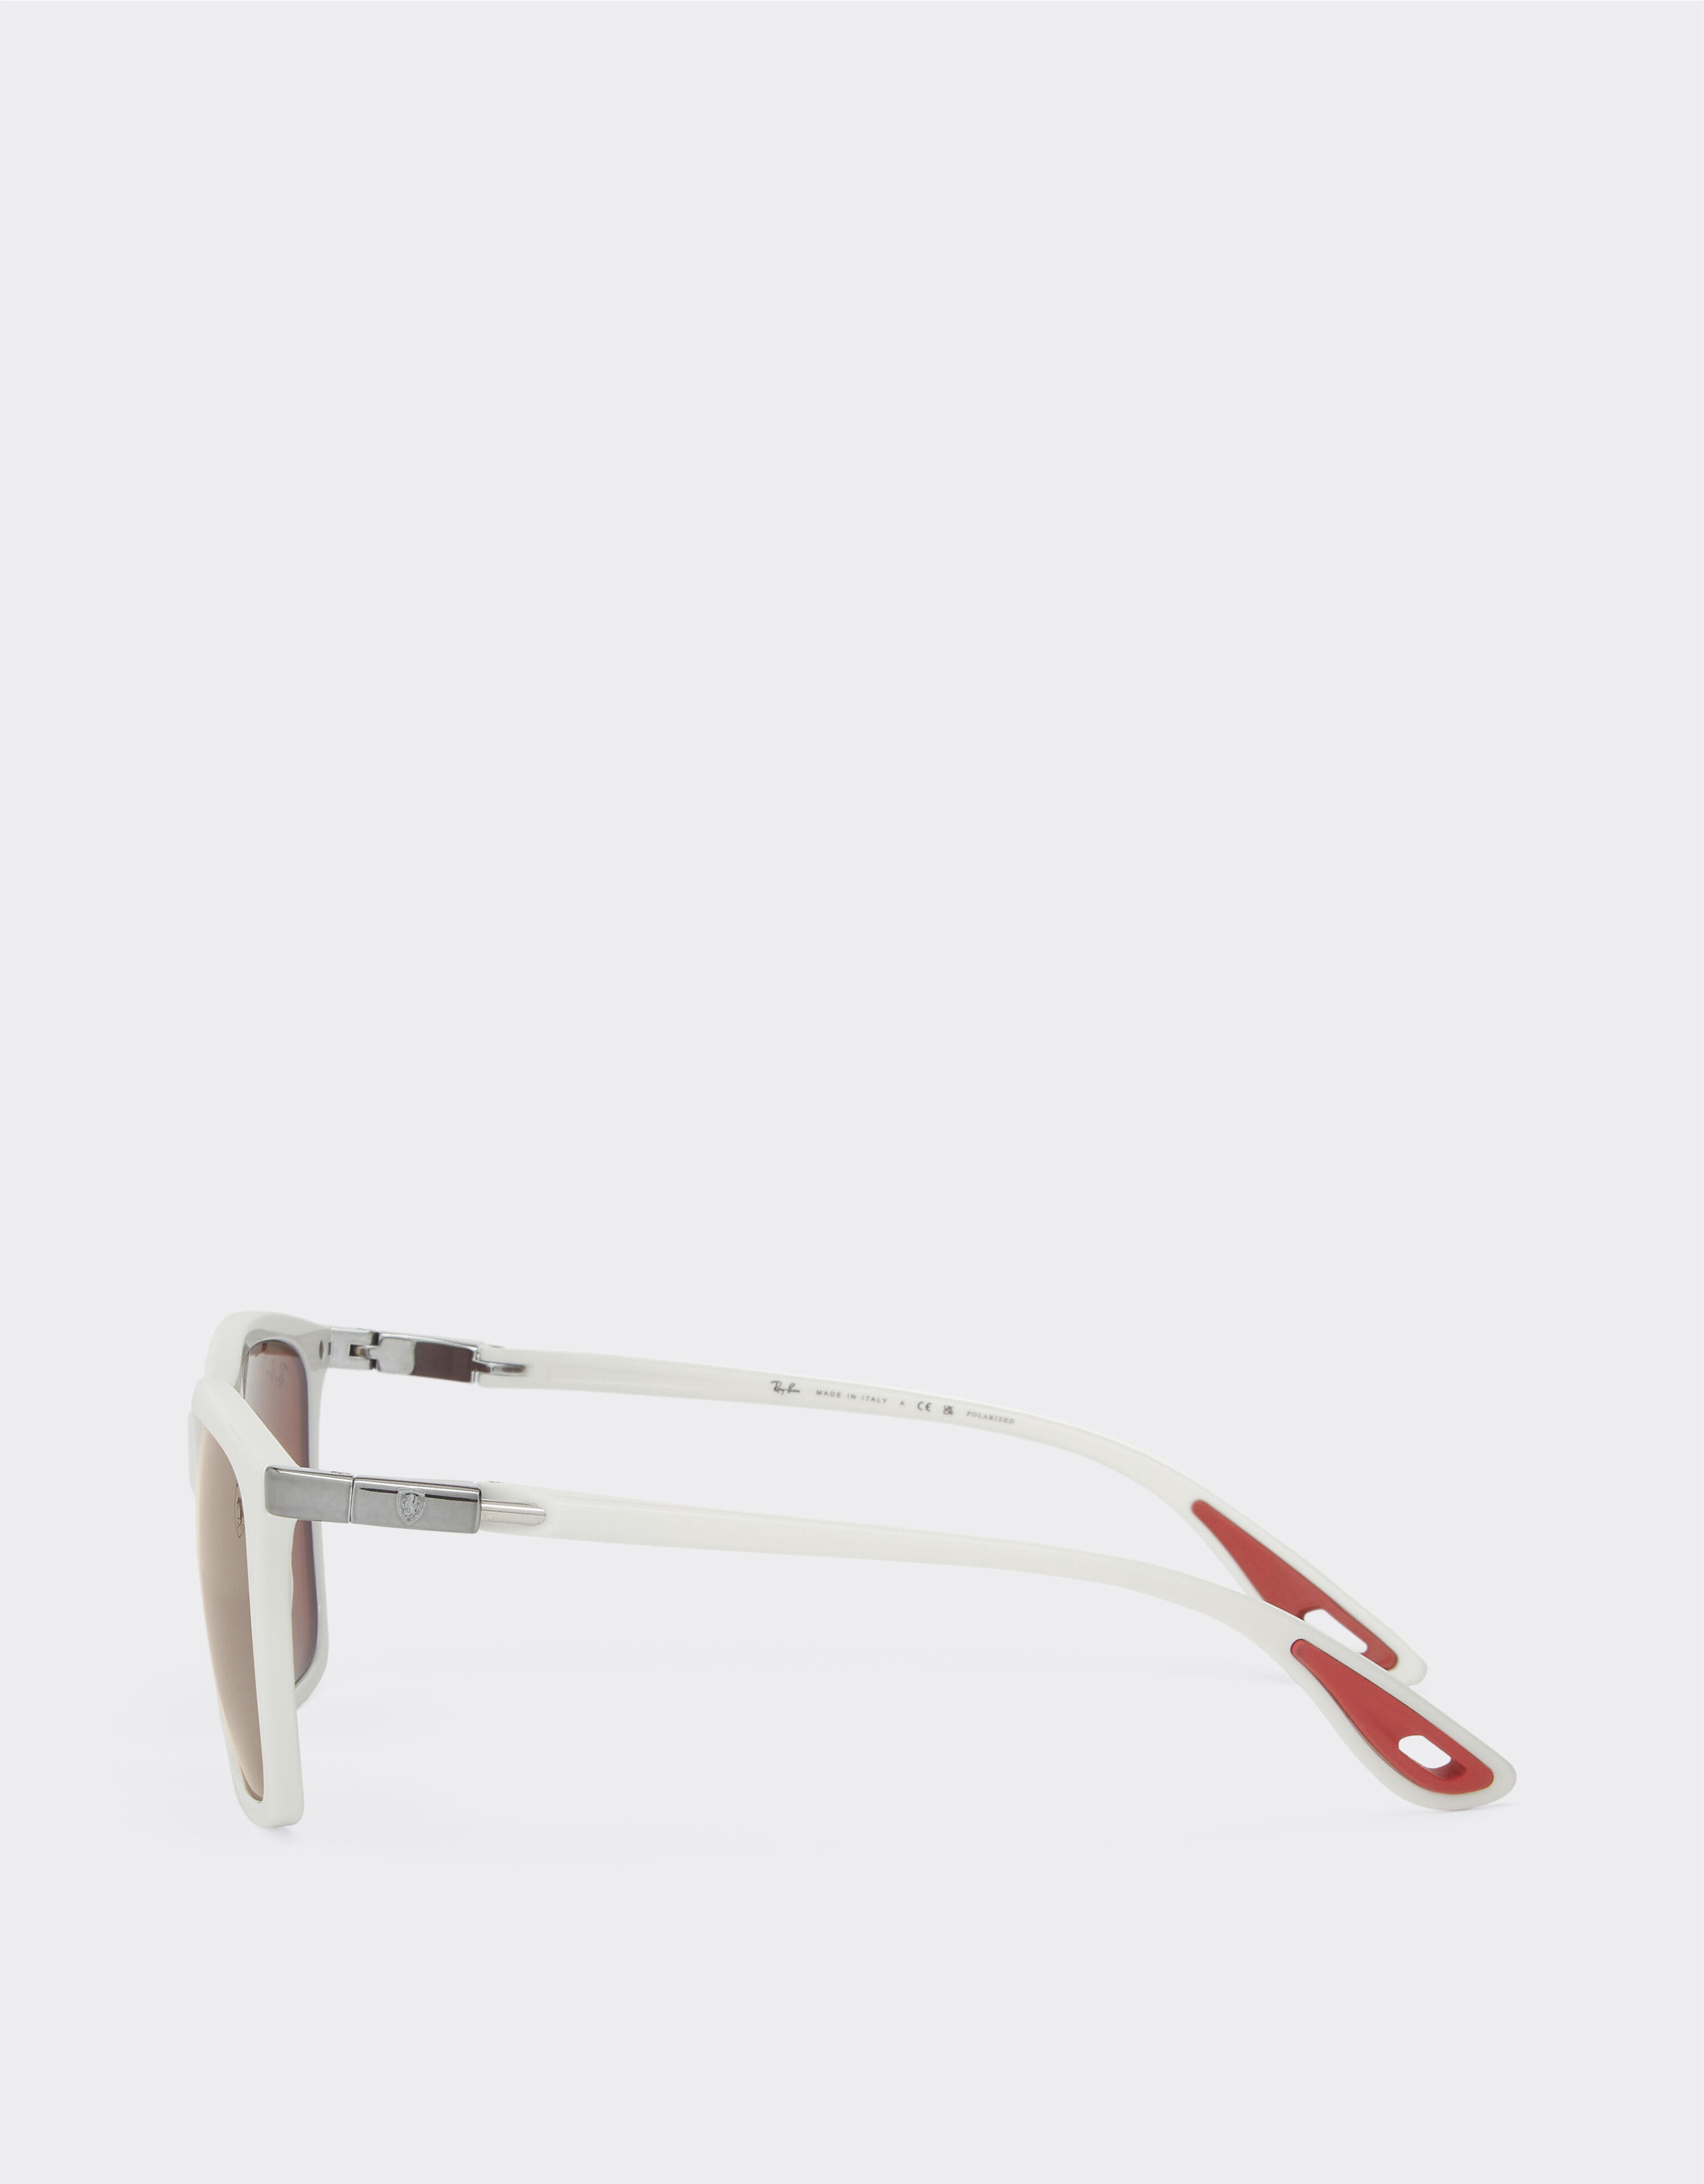 Ferrari Ray-Ban for Scuderia Ferrari 0RB4433M Charles Leclerc sunglasses - Special Edition Optical White F1258f